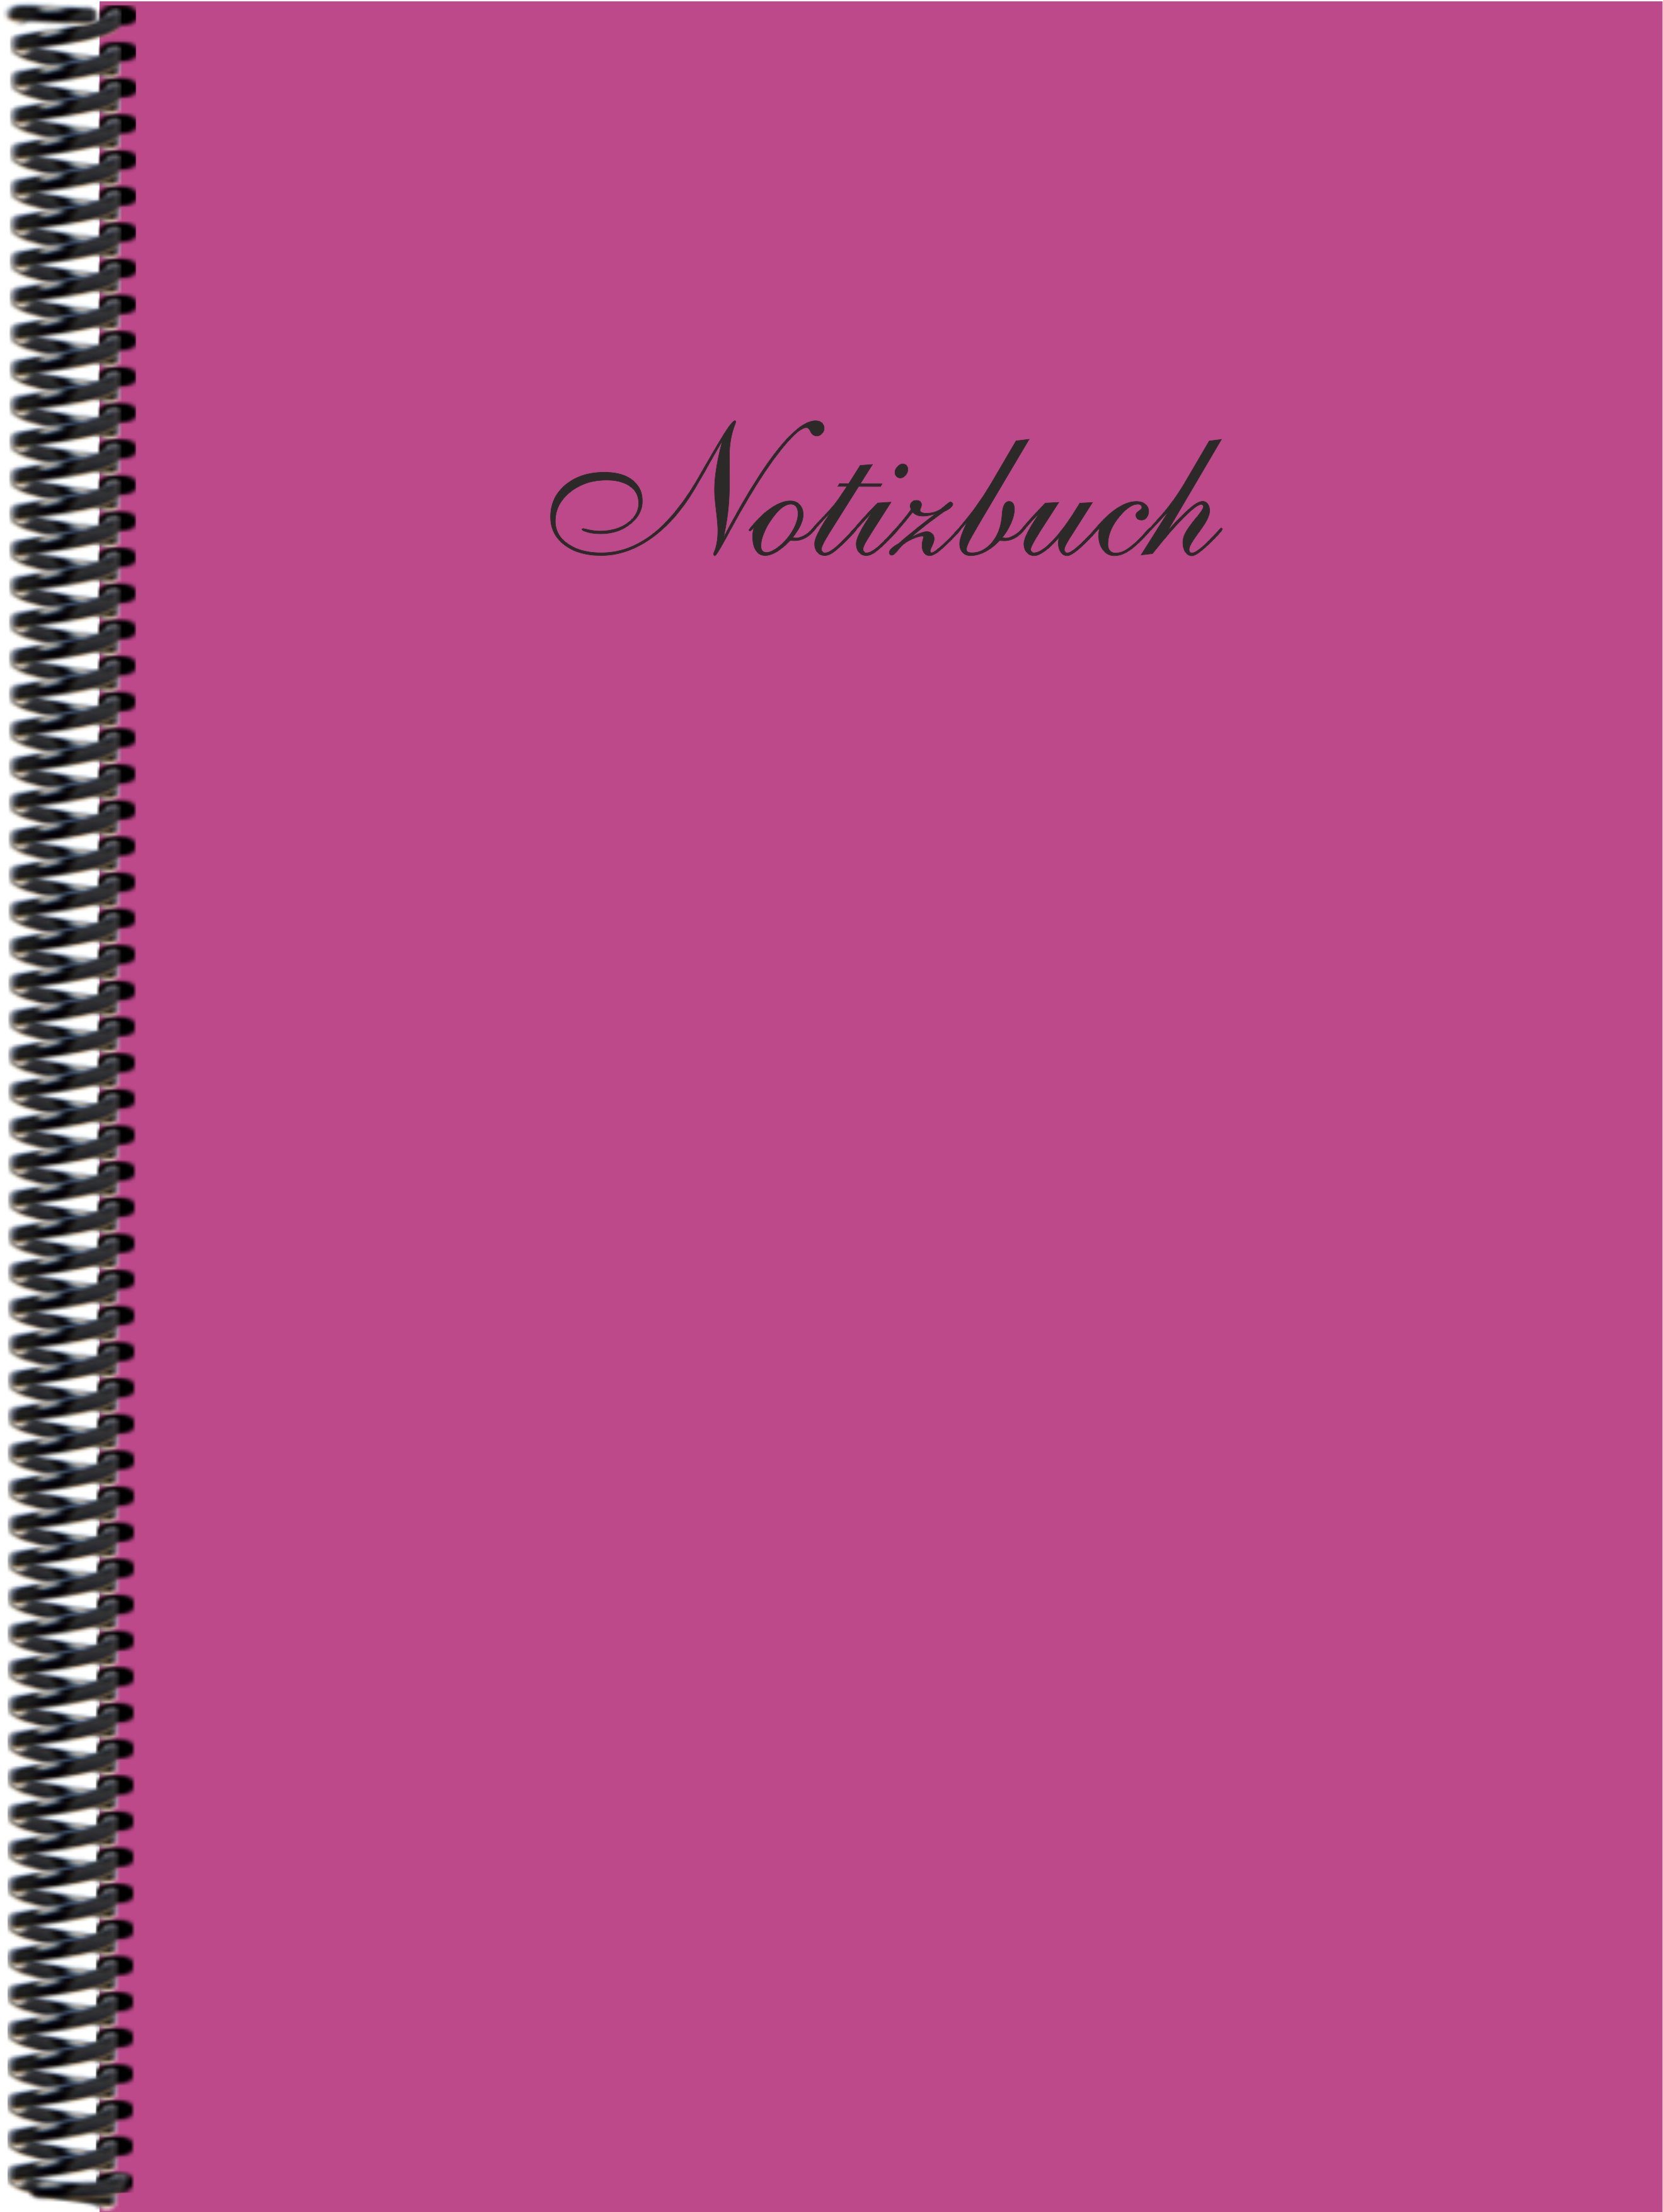 Notizbuch Gmbh E&Z blanko, der Notizbuch in Verlag DINA4 eosin Trendfarbe